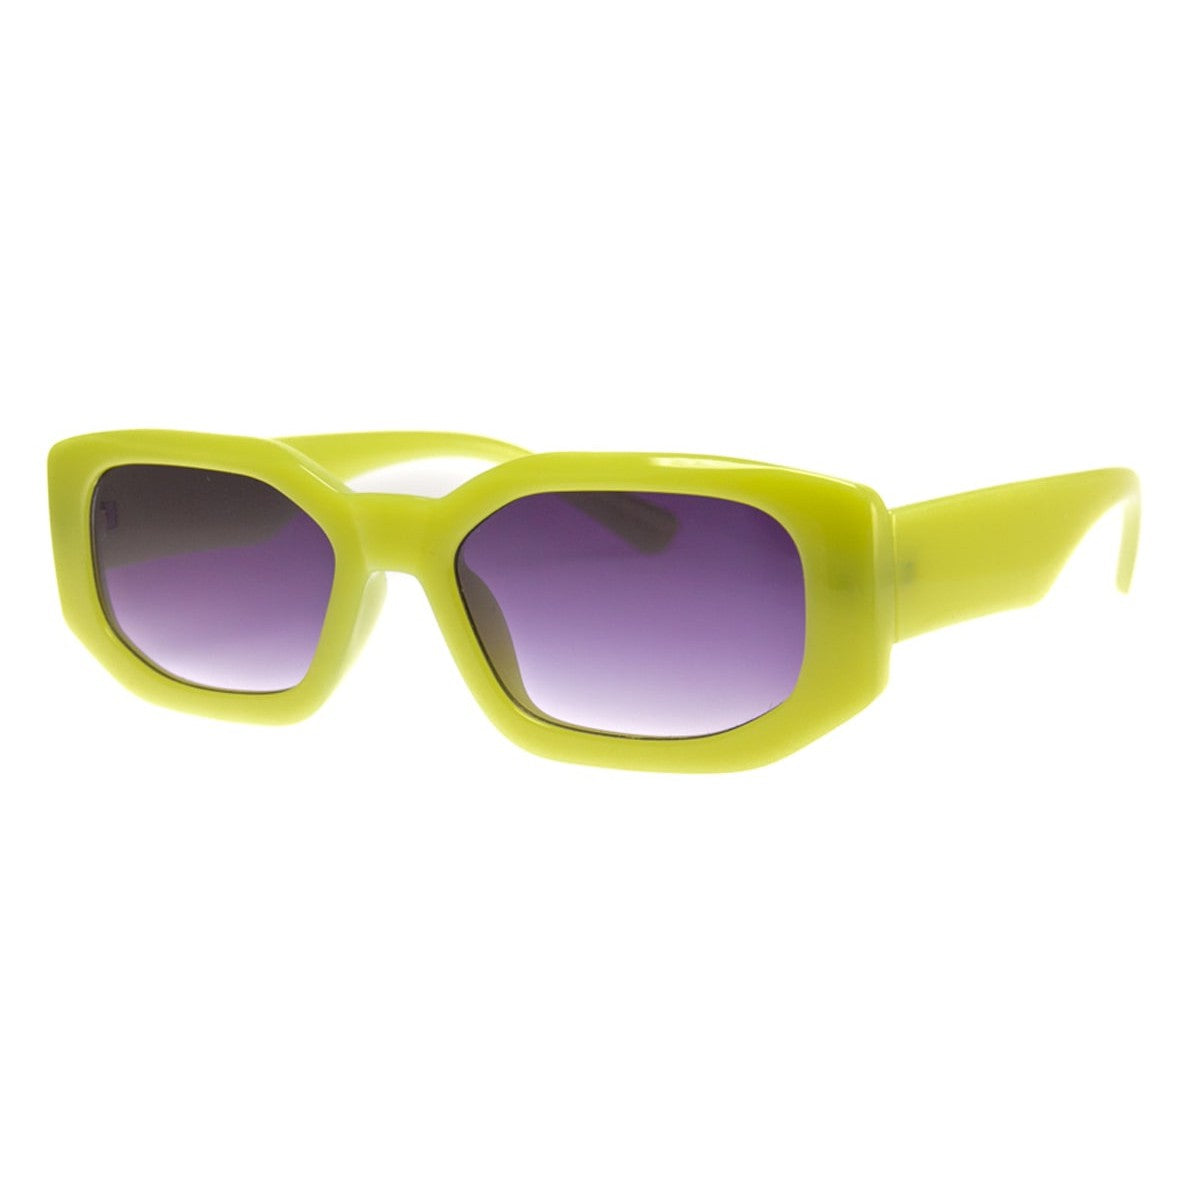 Hamilton Park Sunglasses - Lime Green